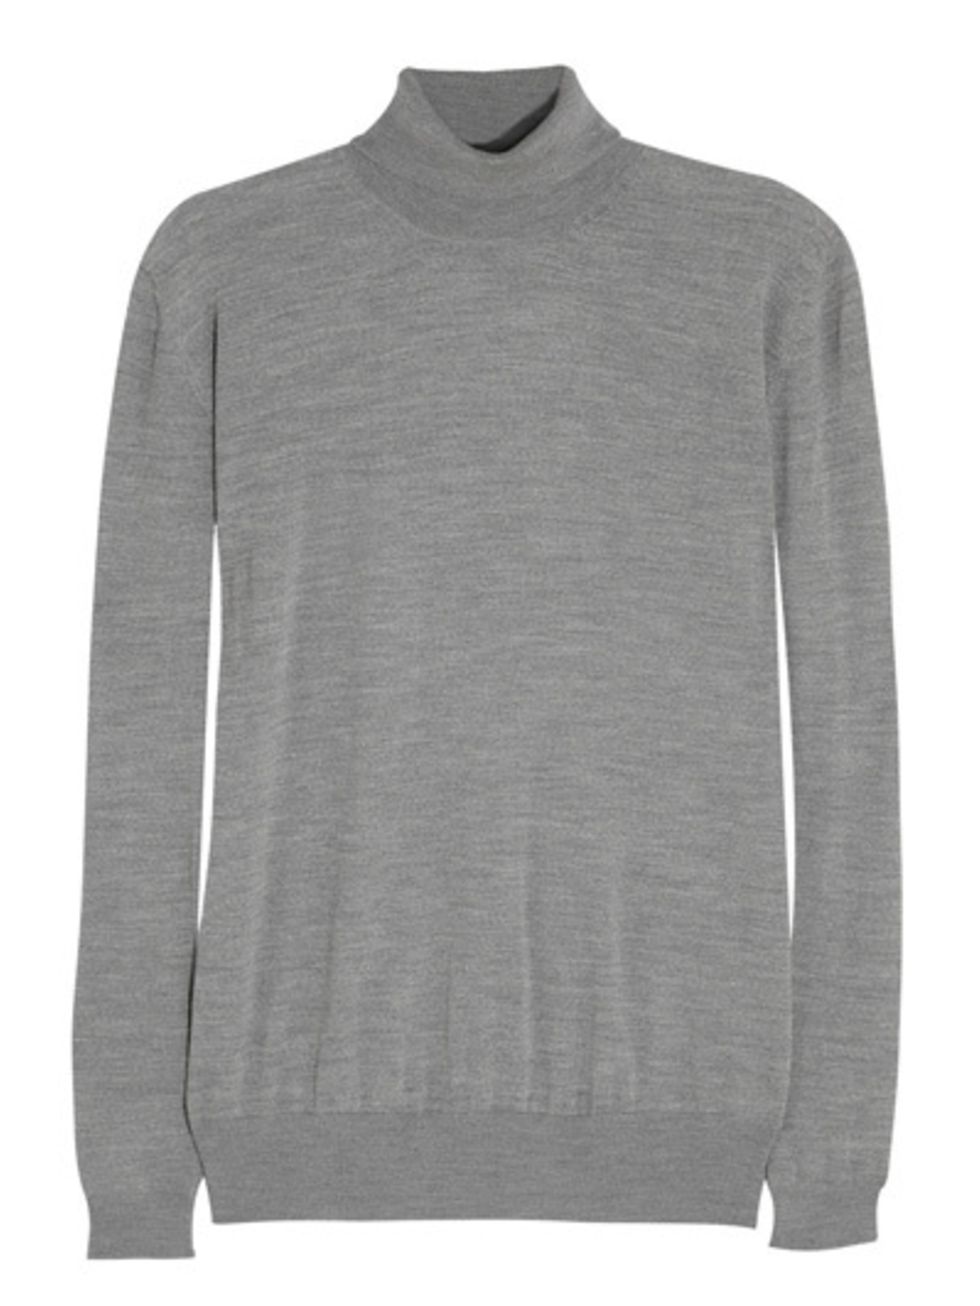 Sleeve, White, Black, Grey, Active shirt, Sweater, 